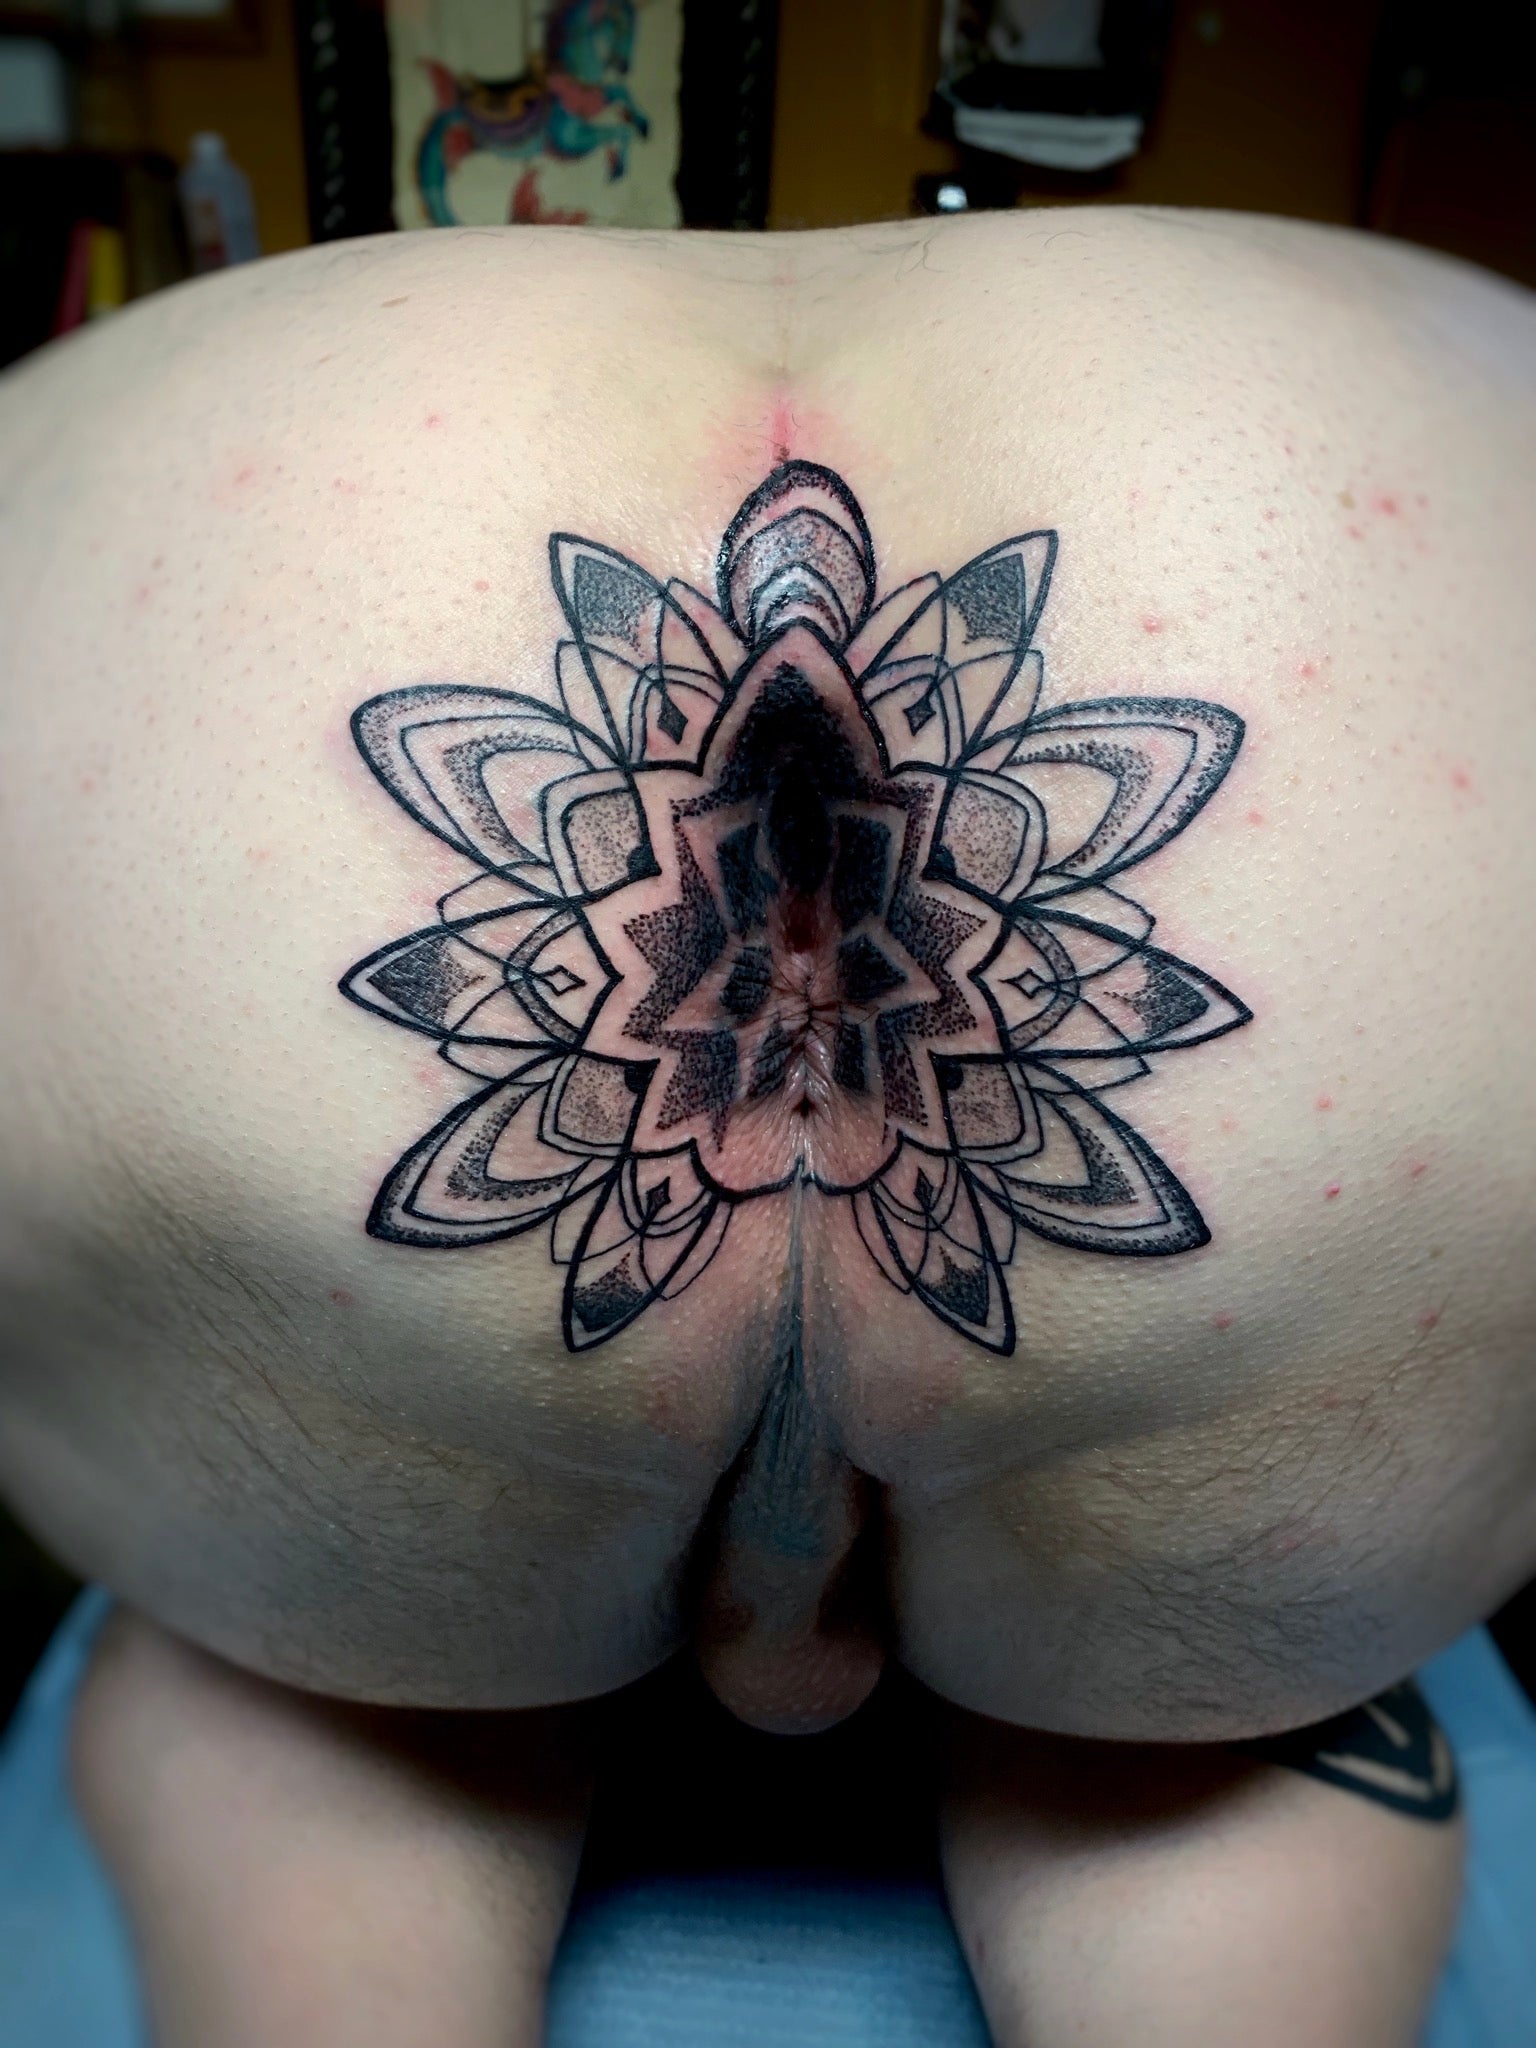 Butthole tattoos